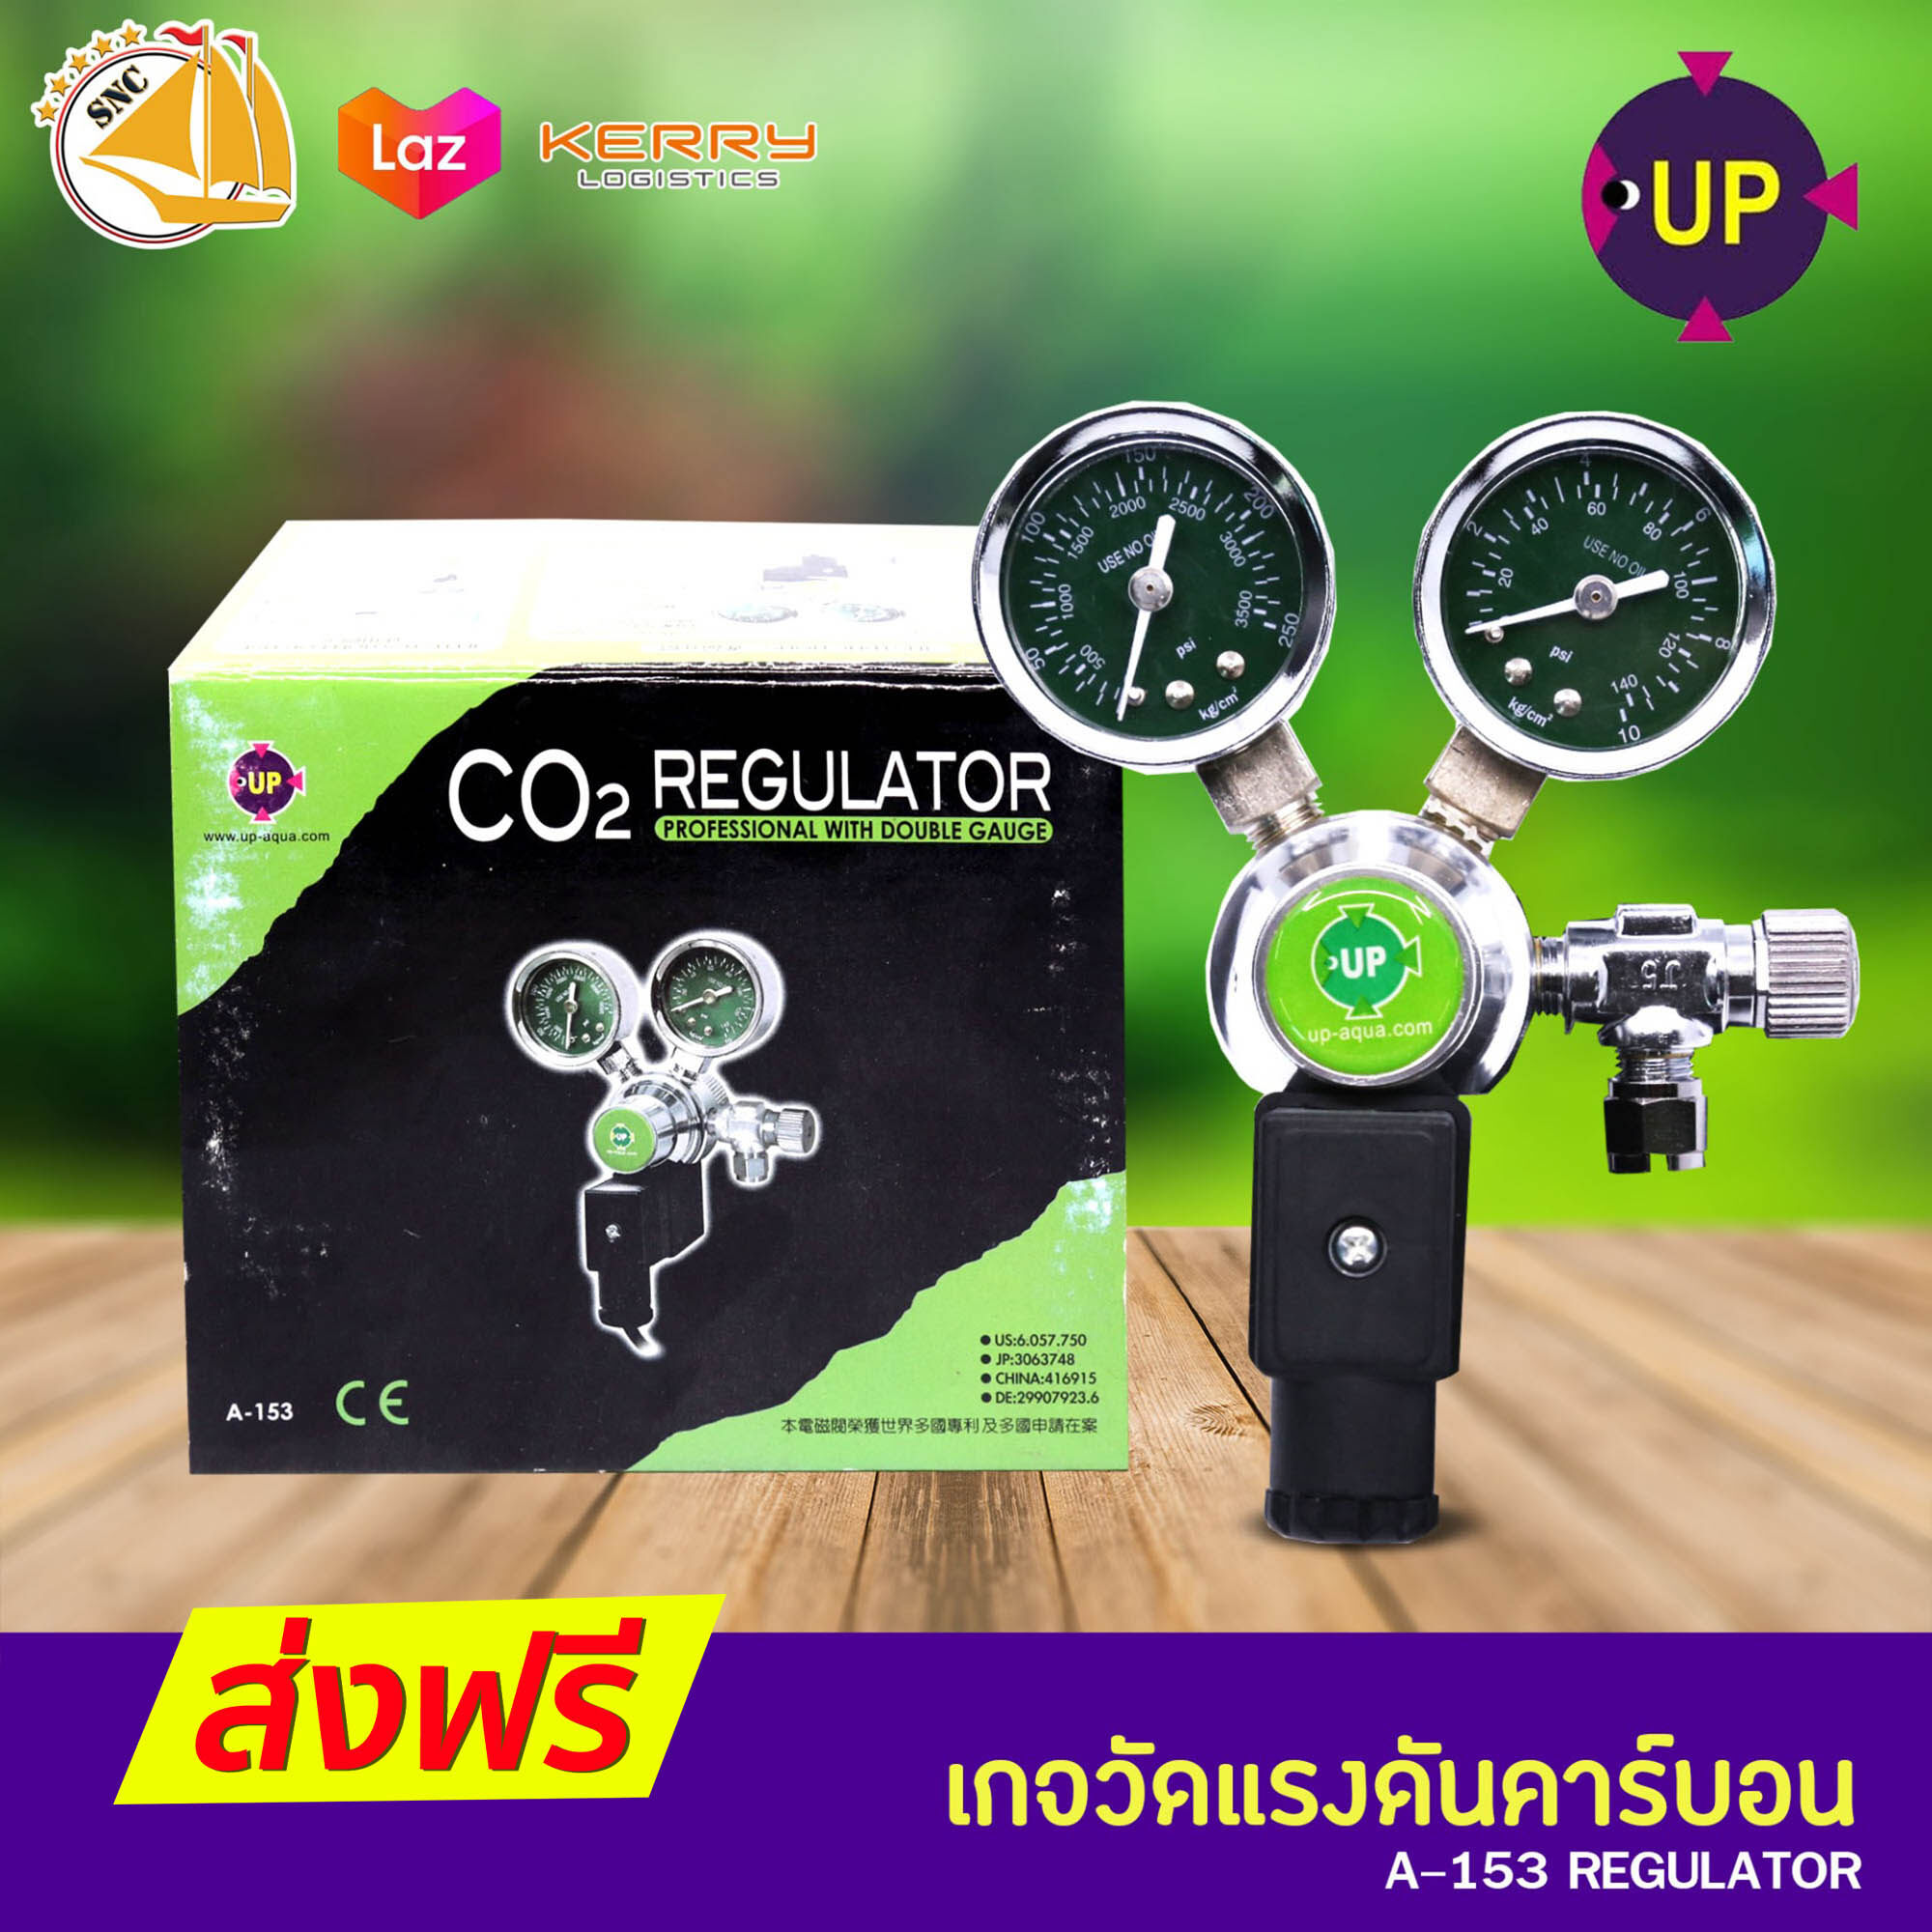 Up Aqua A-153 CO2 Regulator หัวต่อควบคุมถังCO2 แบบมีโซลินอยด์ | Ninekaow.com